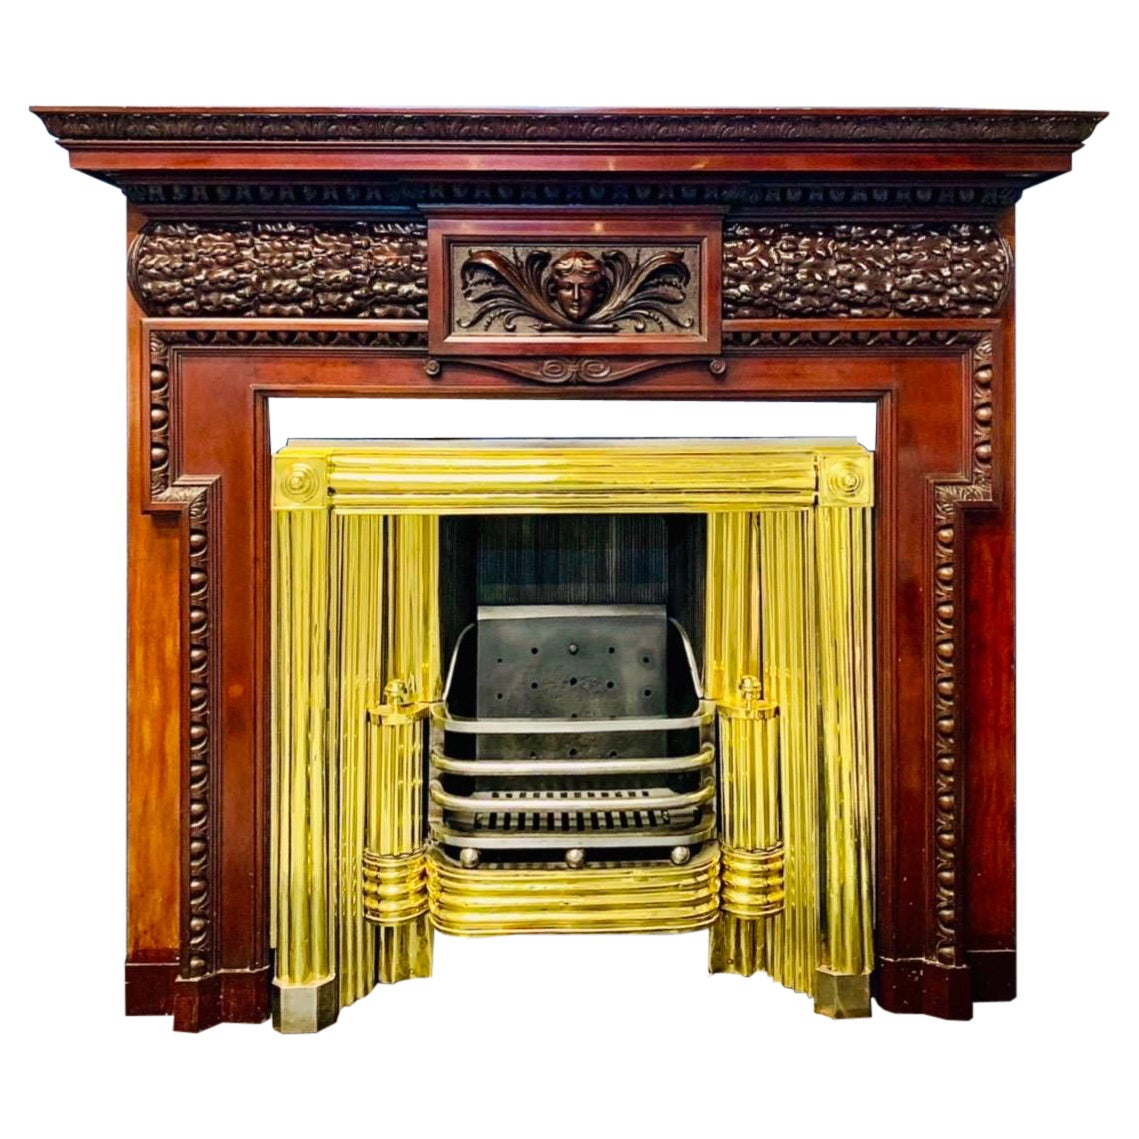 19th Century Carved Walnut Fireplace Surround